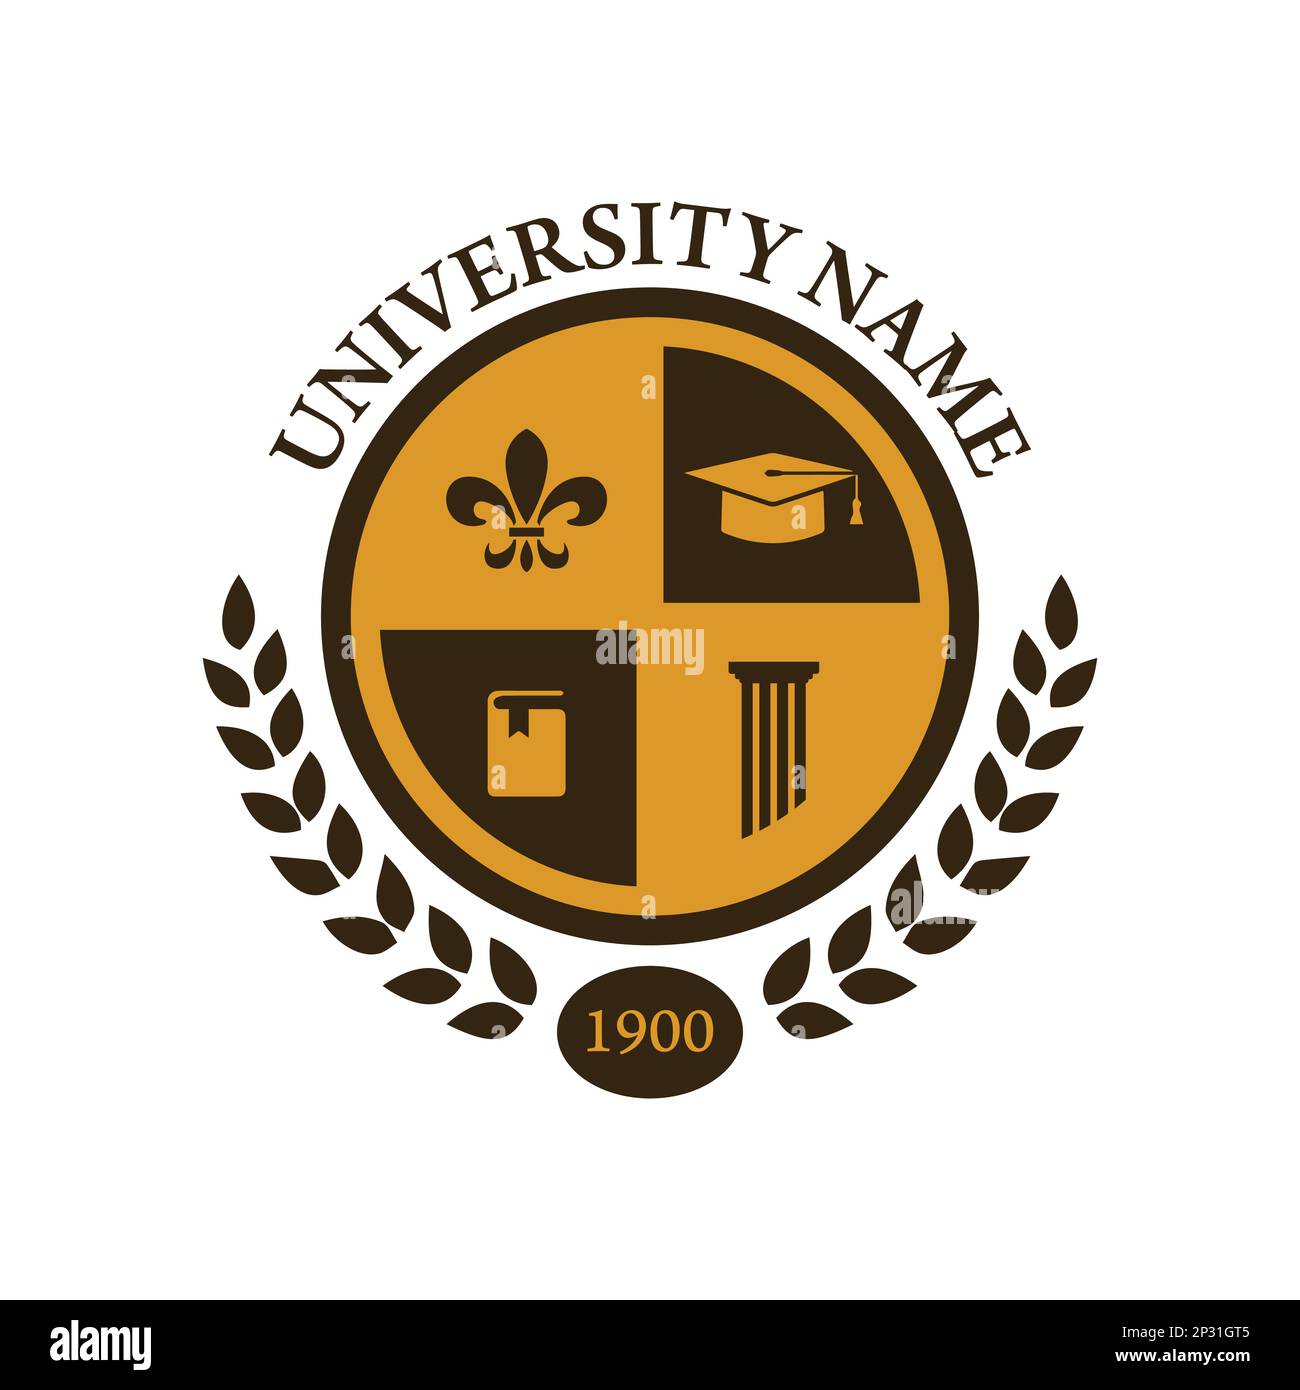 University college school badge logo design vector image. Education badge logo design. University high school emblem Stock Vector